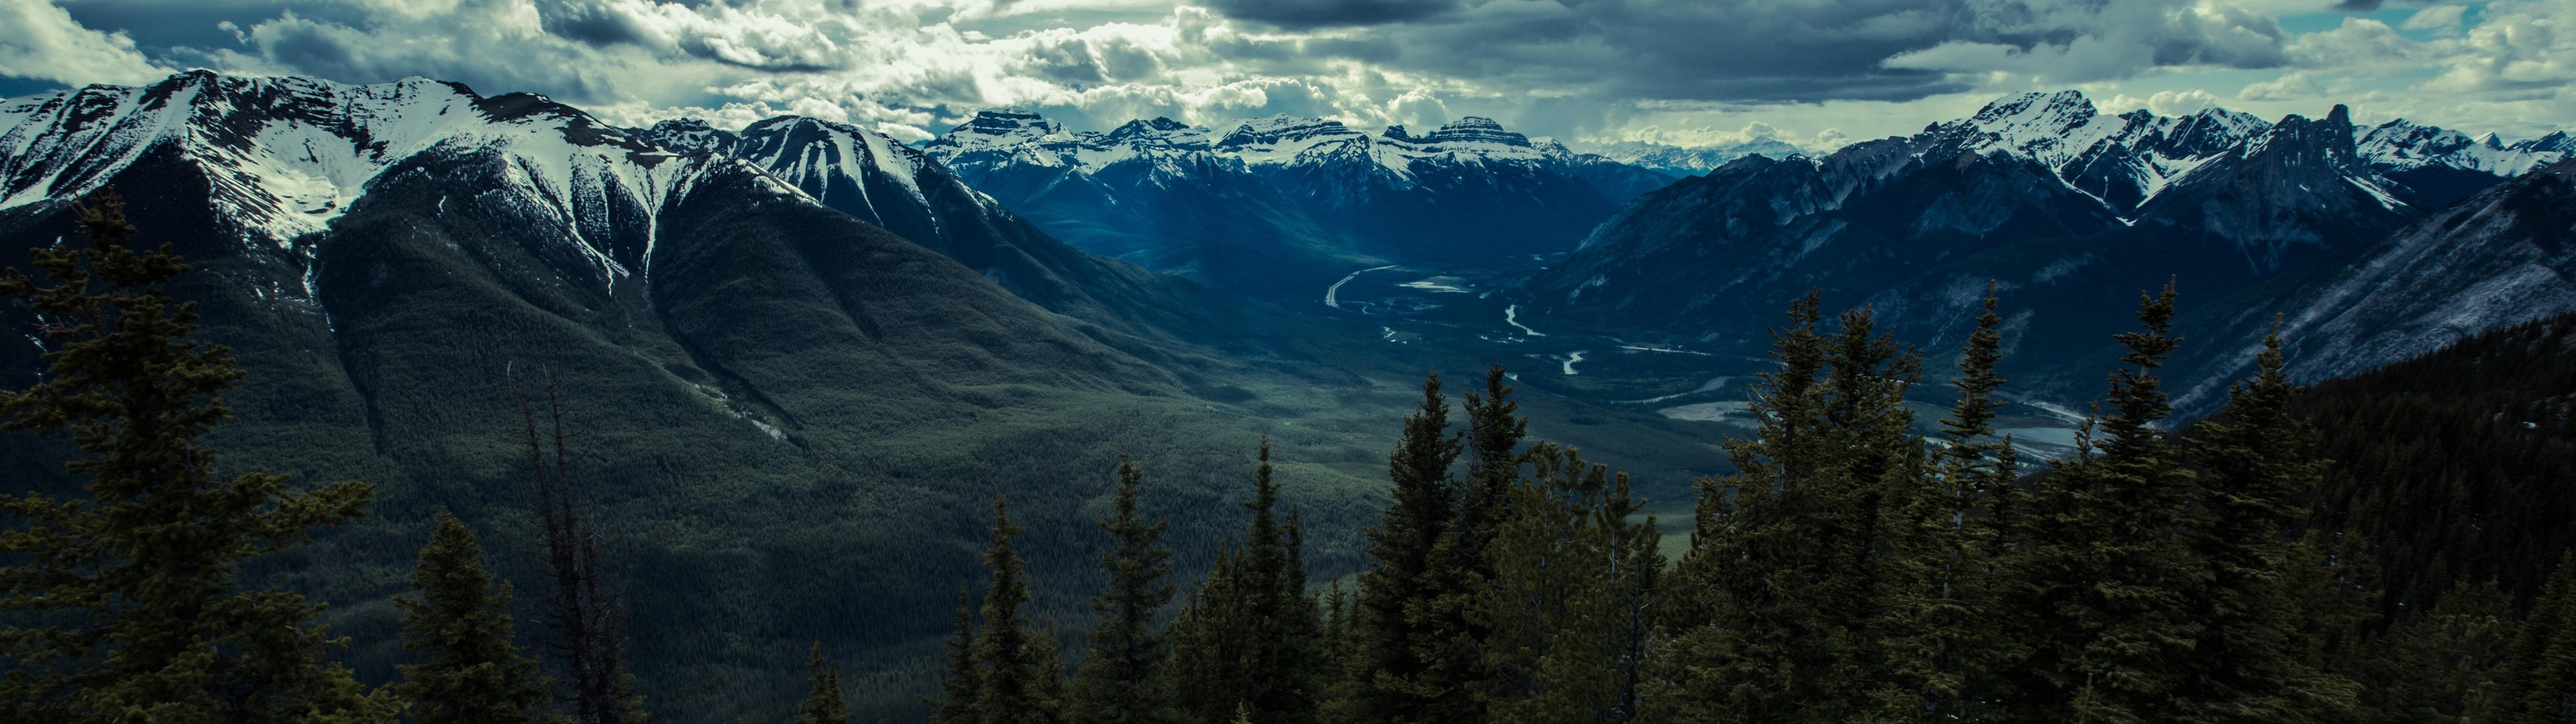 Landscape Forest Mountains Panoramas Banff Banff National Park Canada 3840x1080